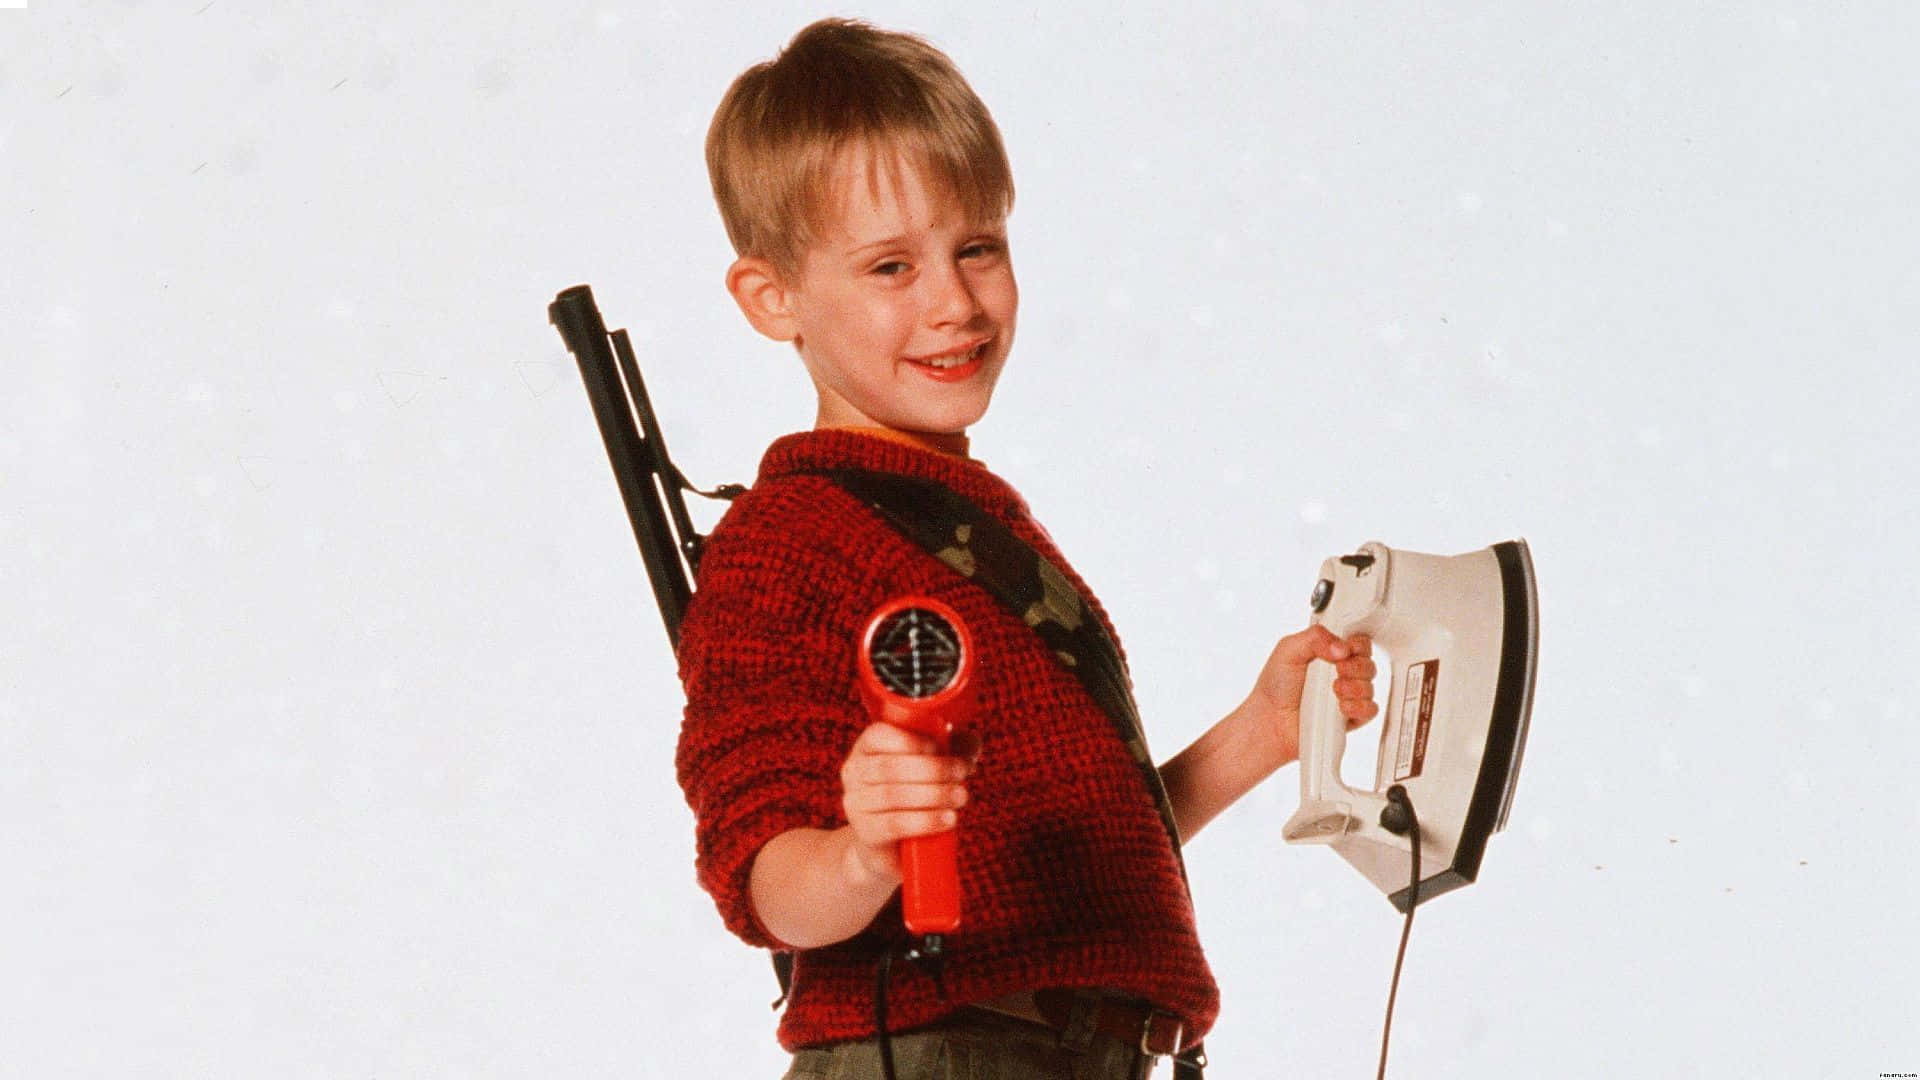 A Young Boy Holding An Iron And A Gun